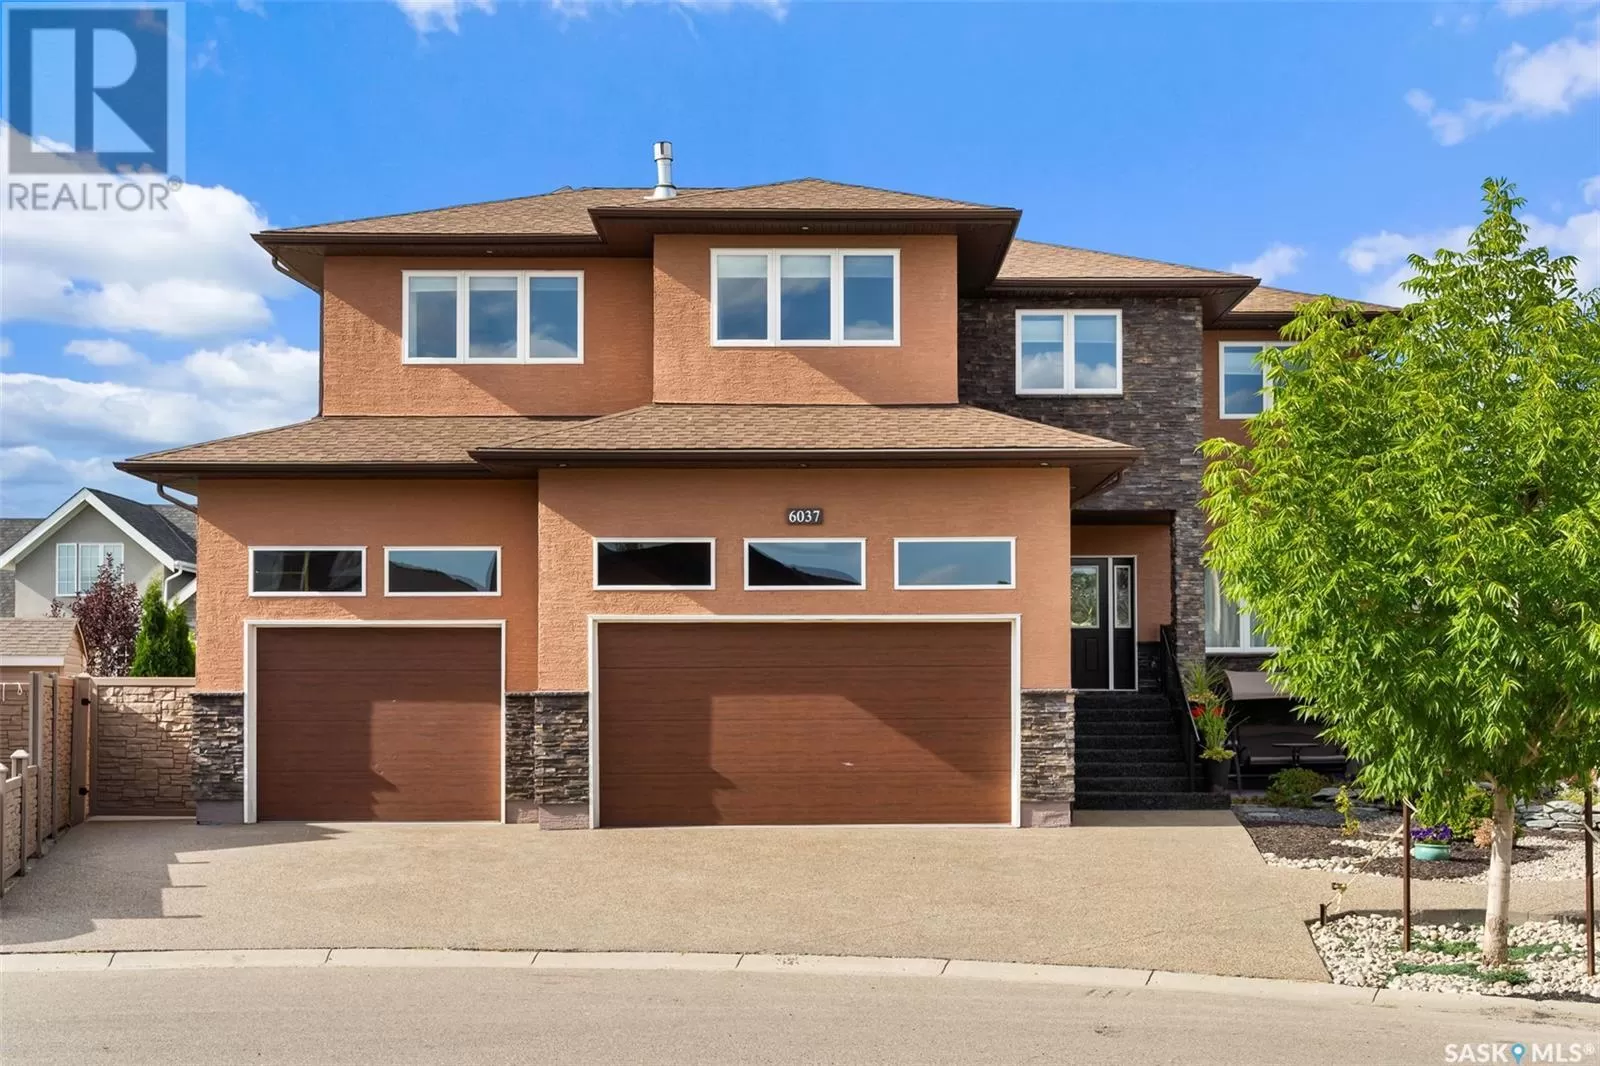 House for rent: 6037 Eagles Cove, Regina, Saskatchewan S4X 0H5